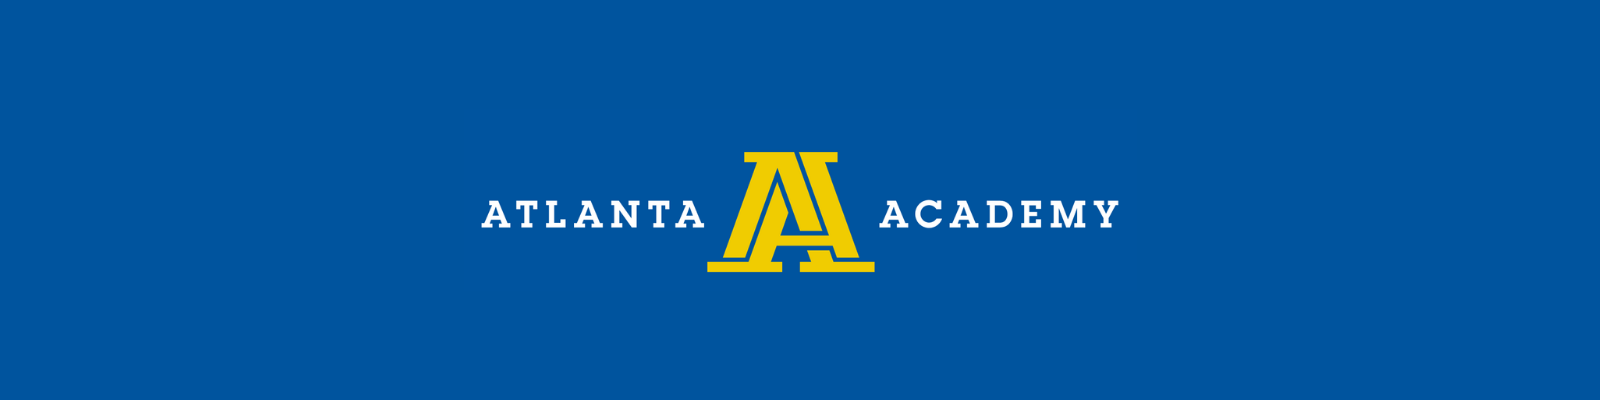 Welcome to Atlanta Academy!